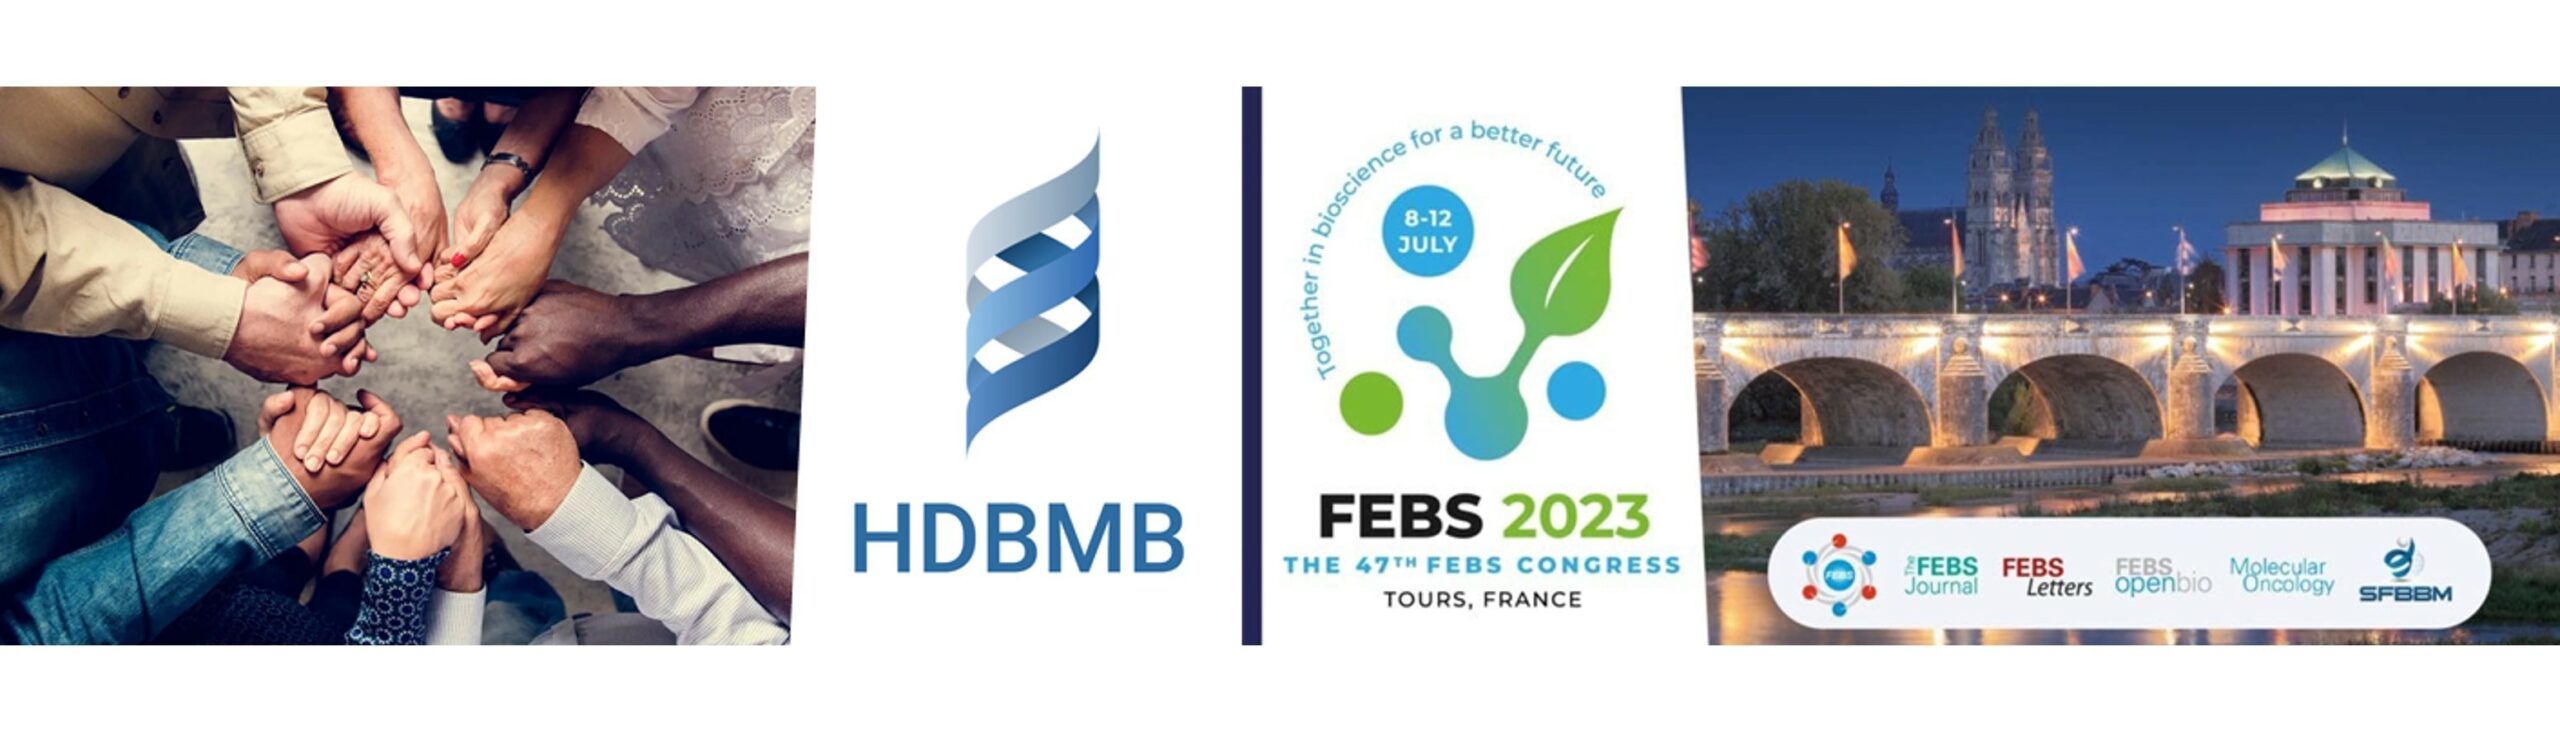 Natječaj HDBMB program financijske potpore članovima za aktivno sudjelovanje na kongresu FEBS 2023